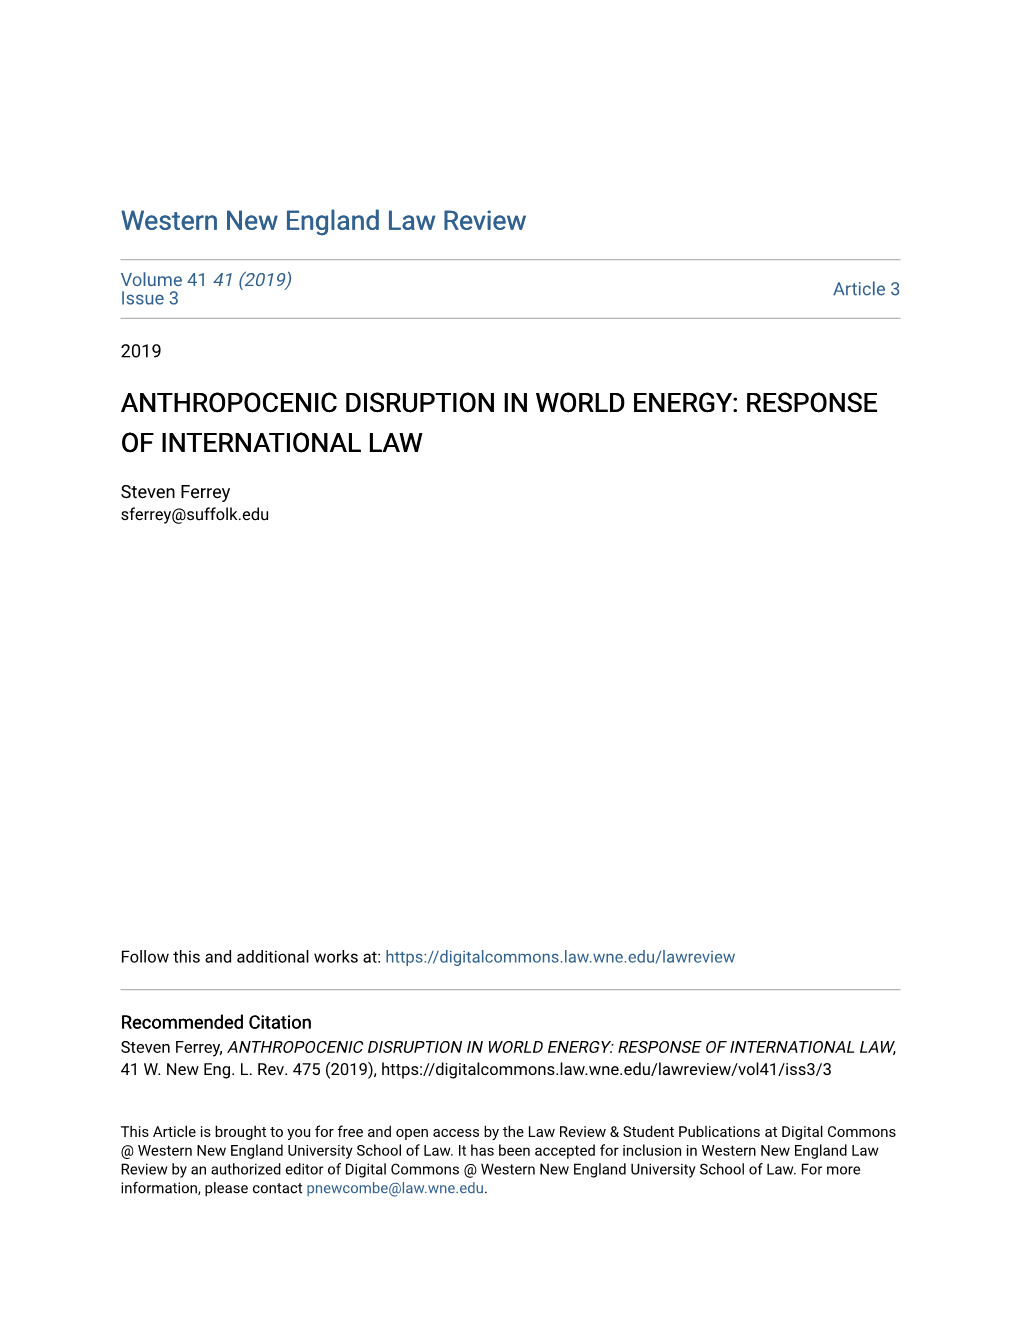 Anthropocenic Disruption in World Energy: Response of International Law